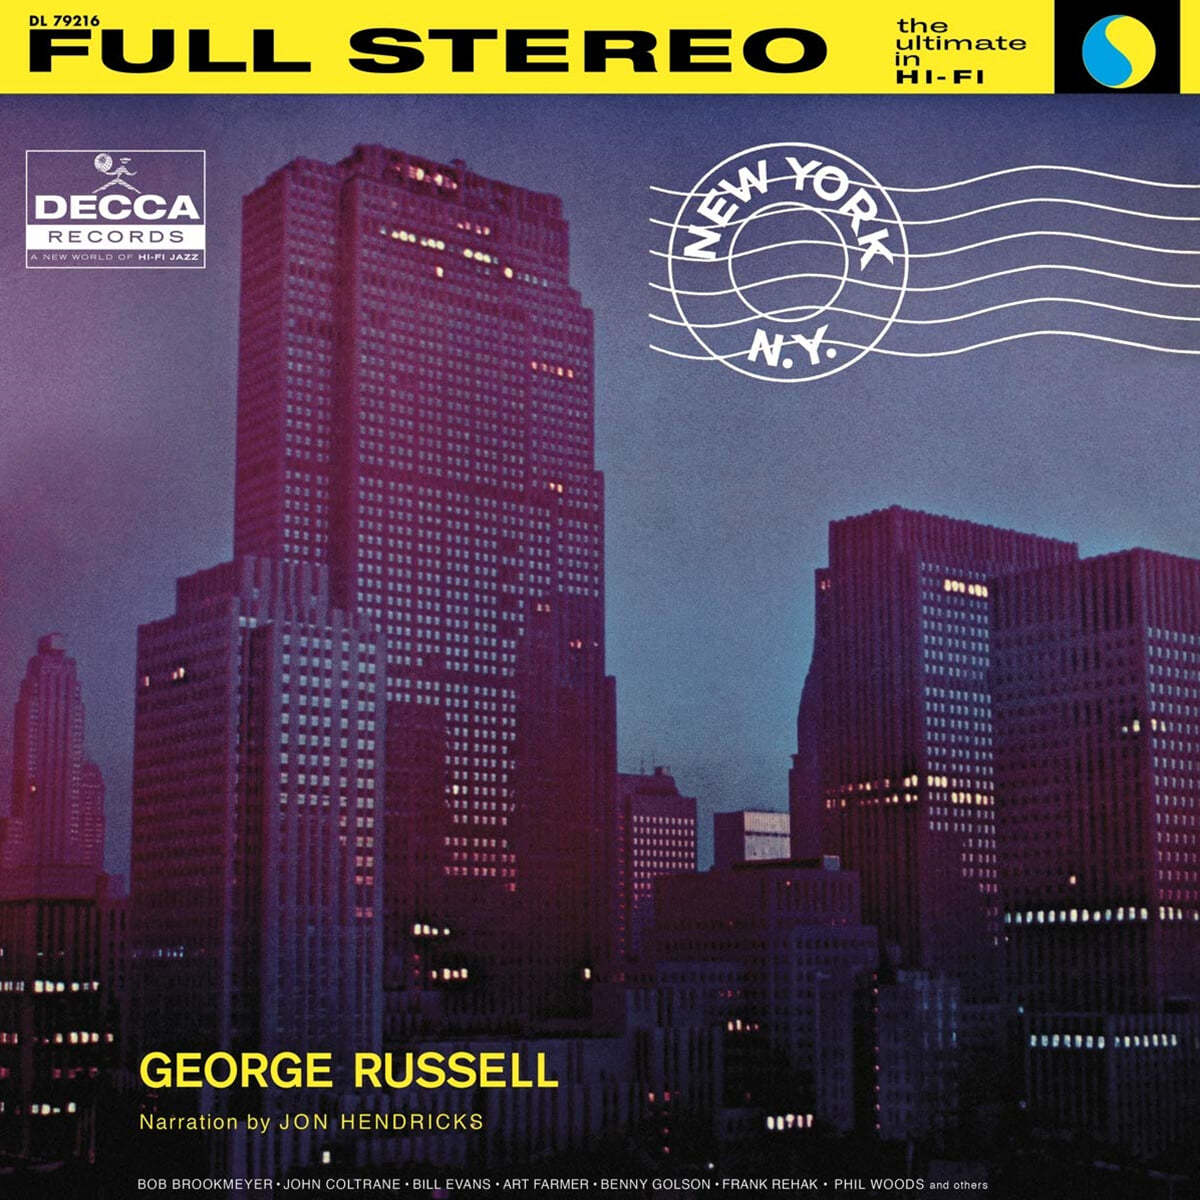 George Russell (조지 러셀) - New York, N.Y. [LP] 